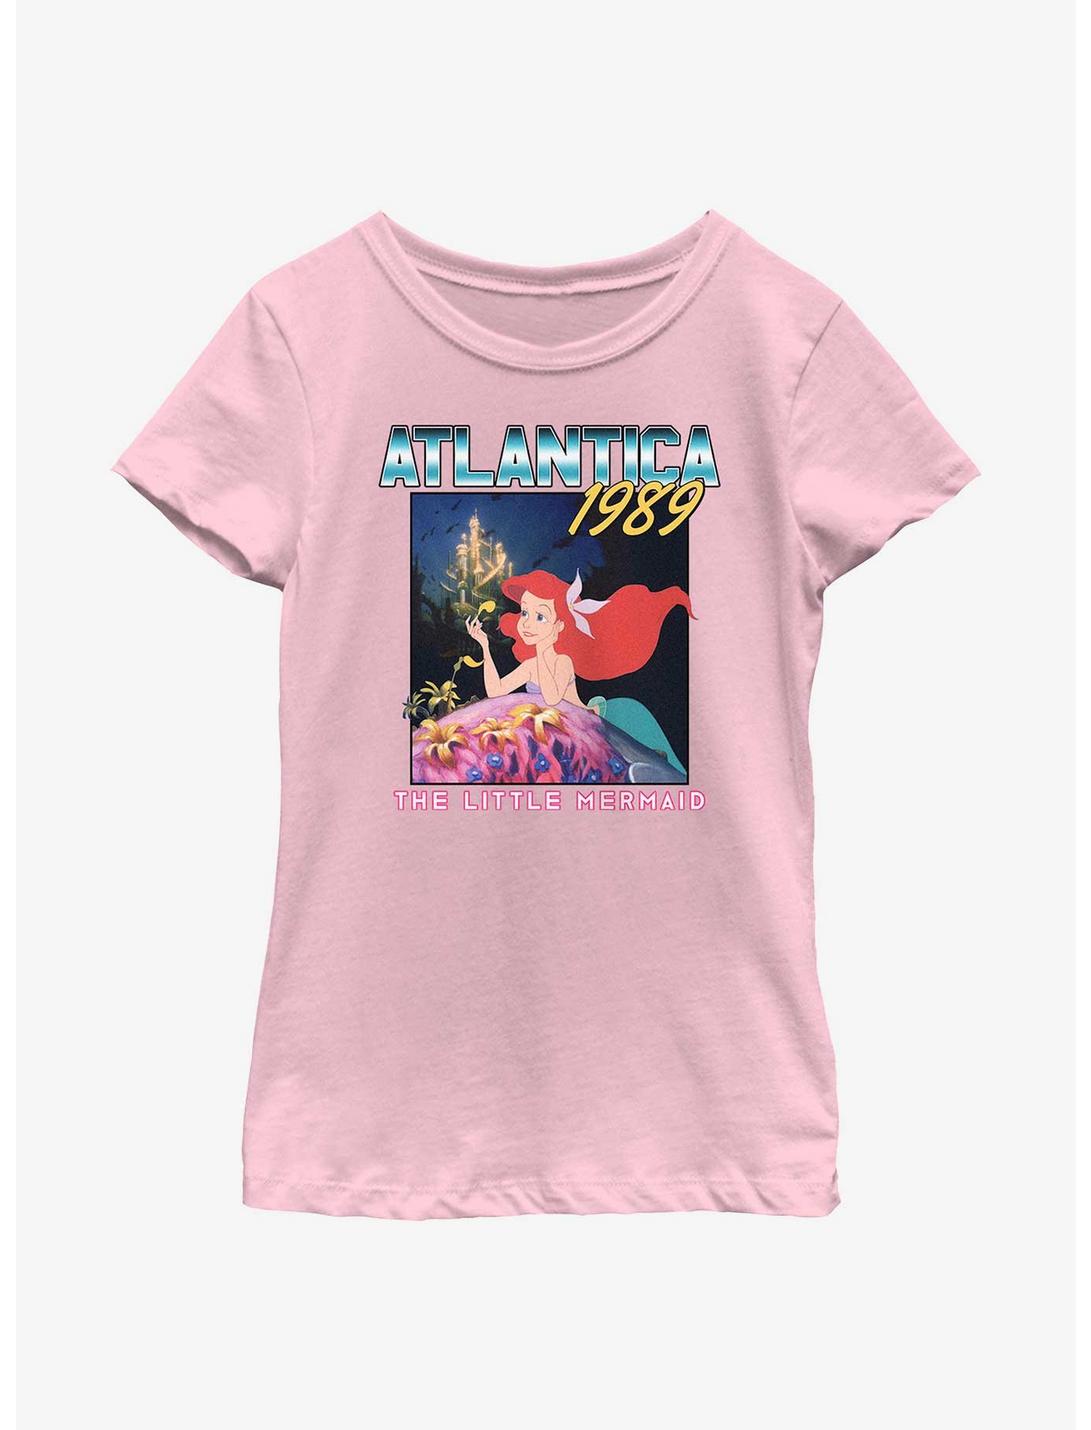 Disney The Little Mermaid Atlantica 1989 Youth Girls T-Shirt, PINK, hi-res